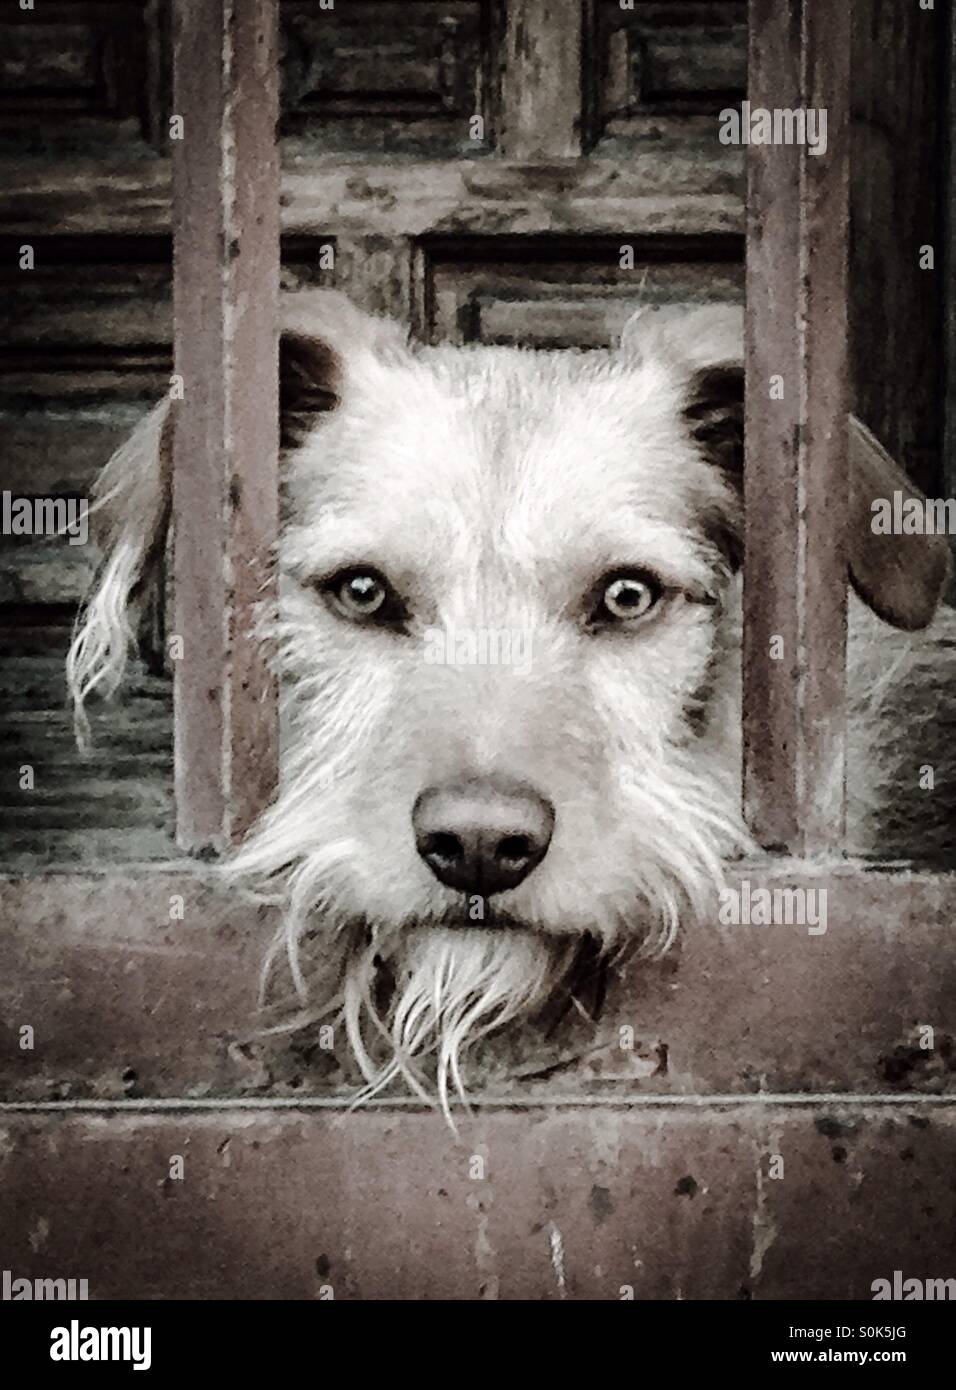 Cute old dog behind a door looking at camera. Stock Photo